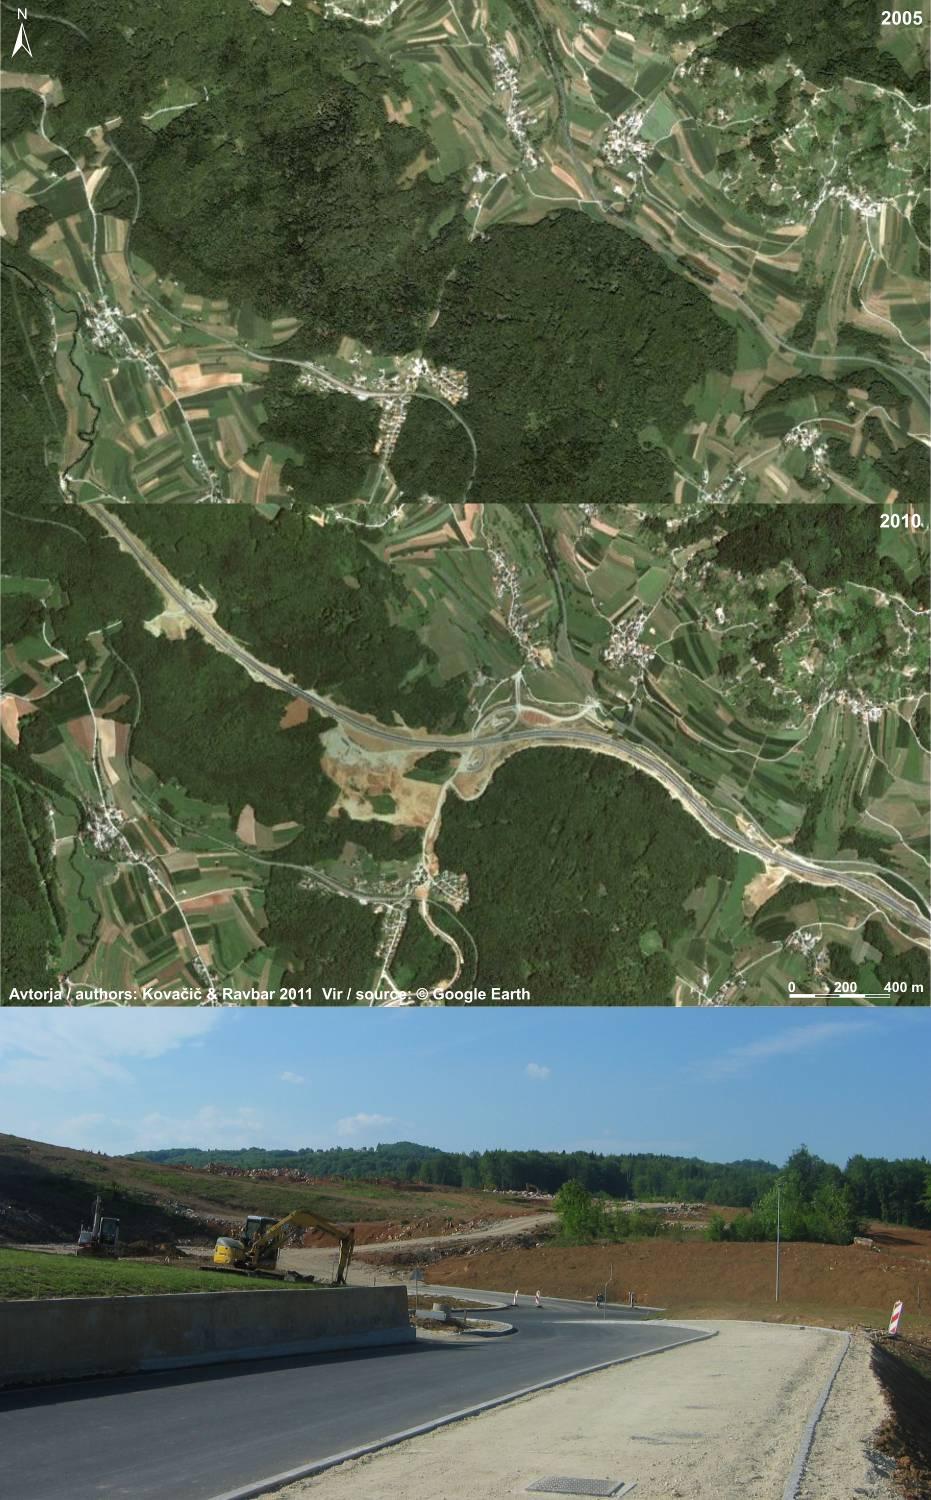 Examples from Slovene karst Mirna Peč Motorway construction